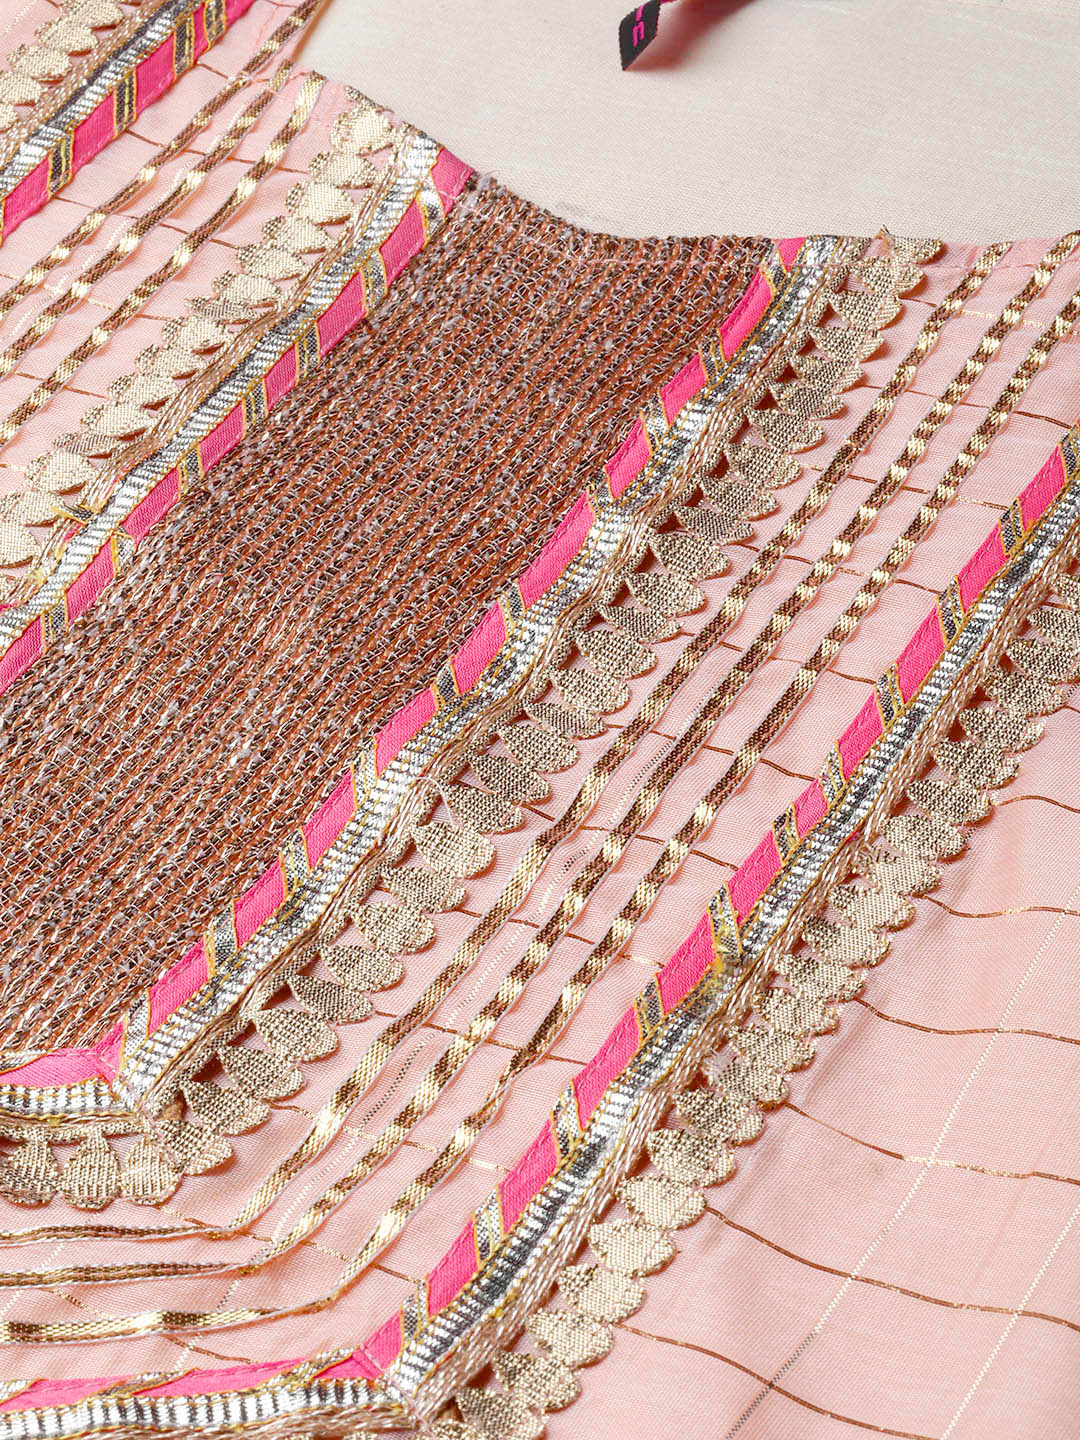 Ishin Women's Chanderi Silk Peach & Beige Embellished A-Line Kurta Skirt Dupatta Set